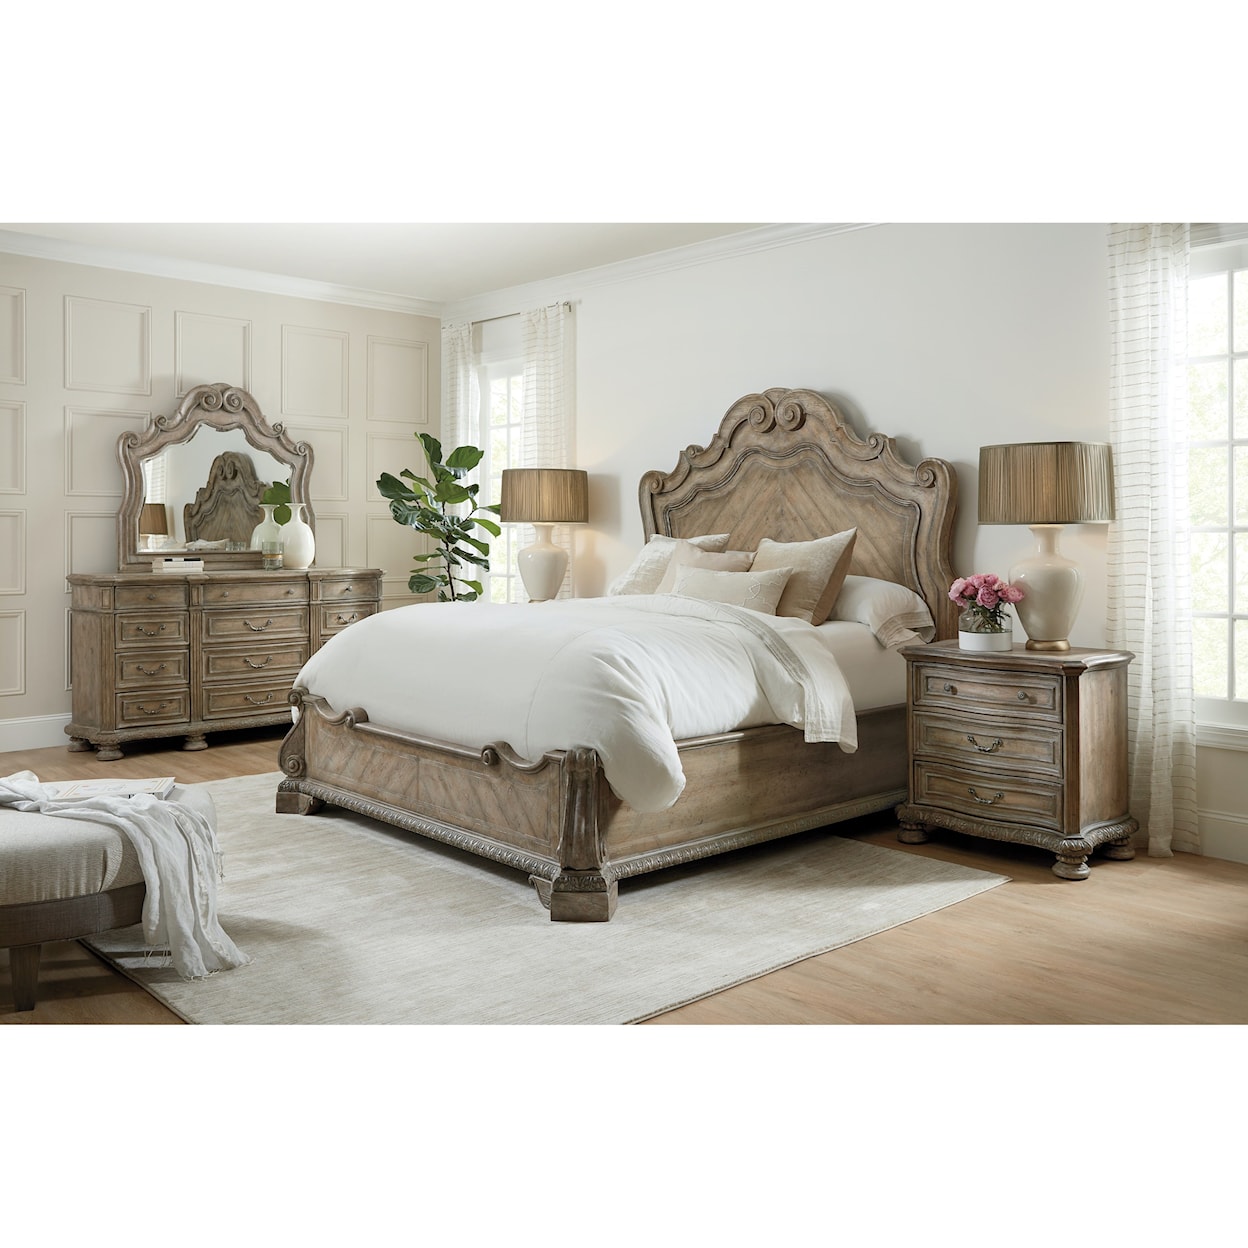 Hooker Furniture Castella California King Bedroom Set